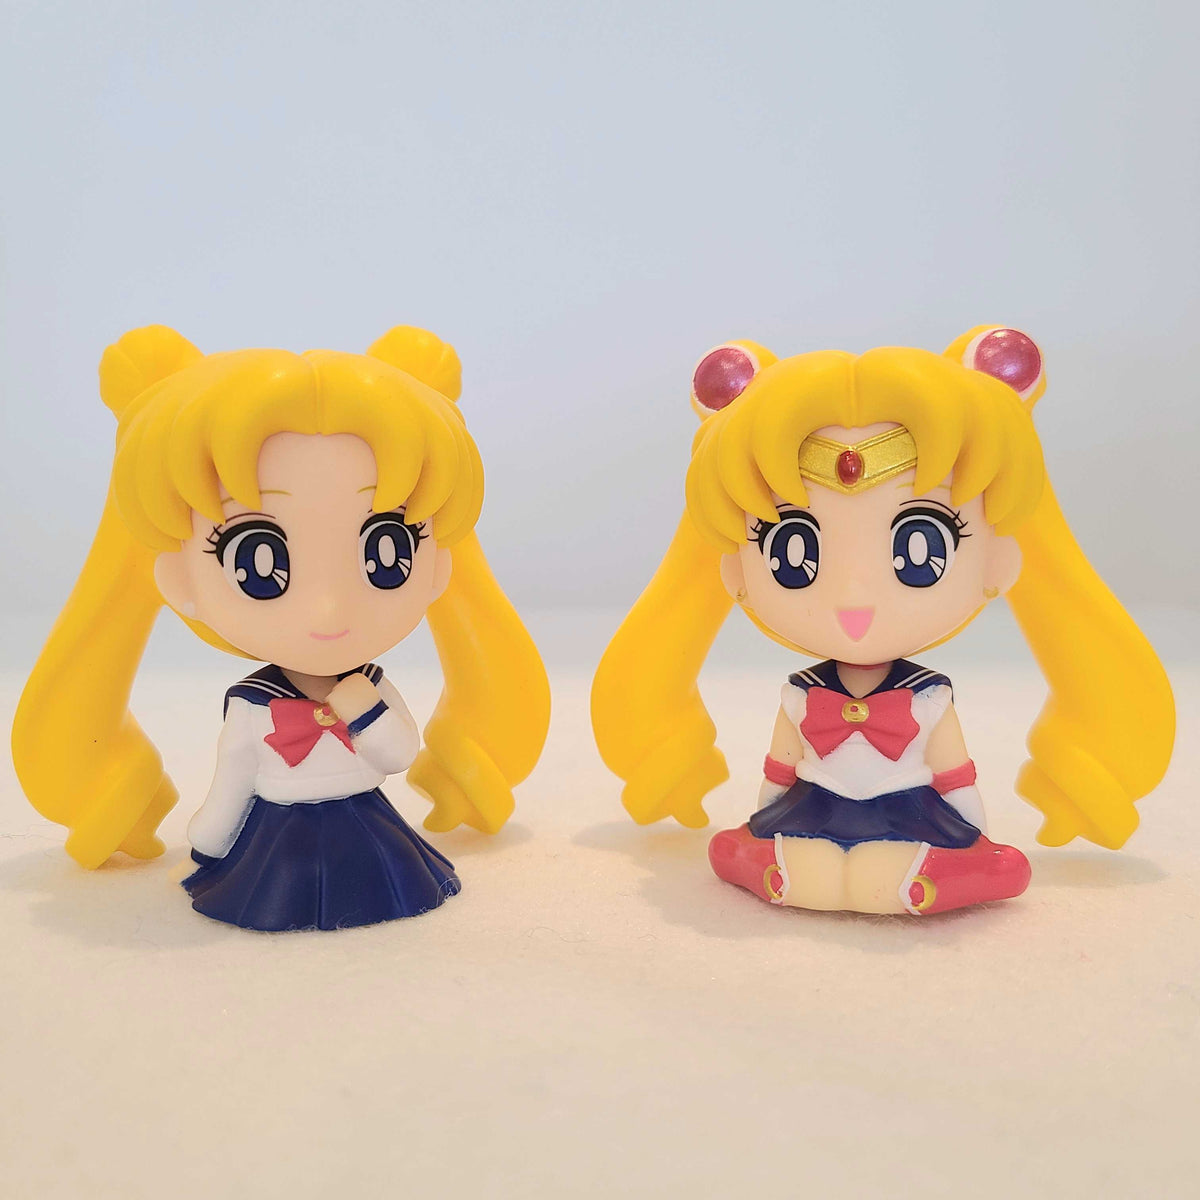 Sailor Moon Set [Sailor Moon &amp; Secret]- Sailor Moon Relaxing Mascot Series by Bandai Shokugan